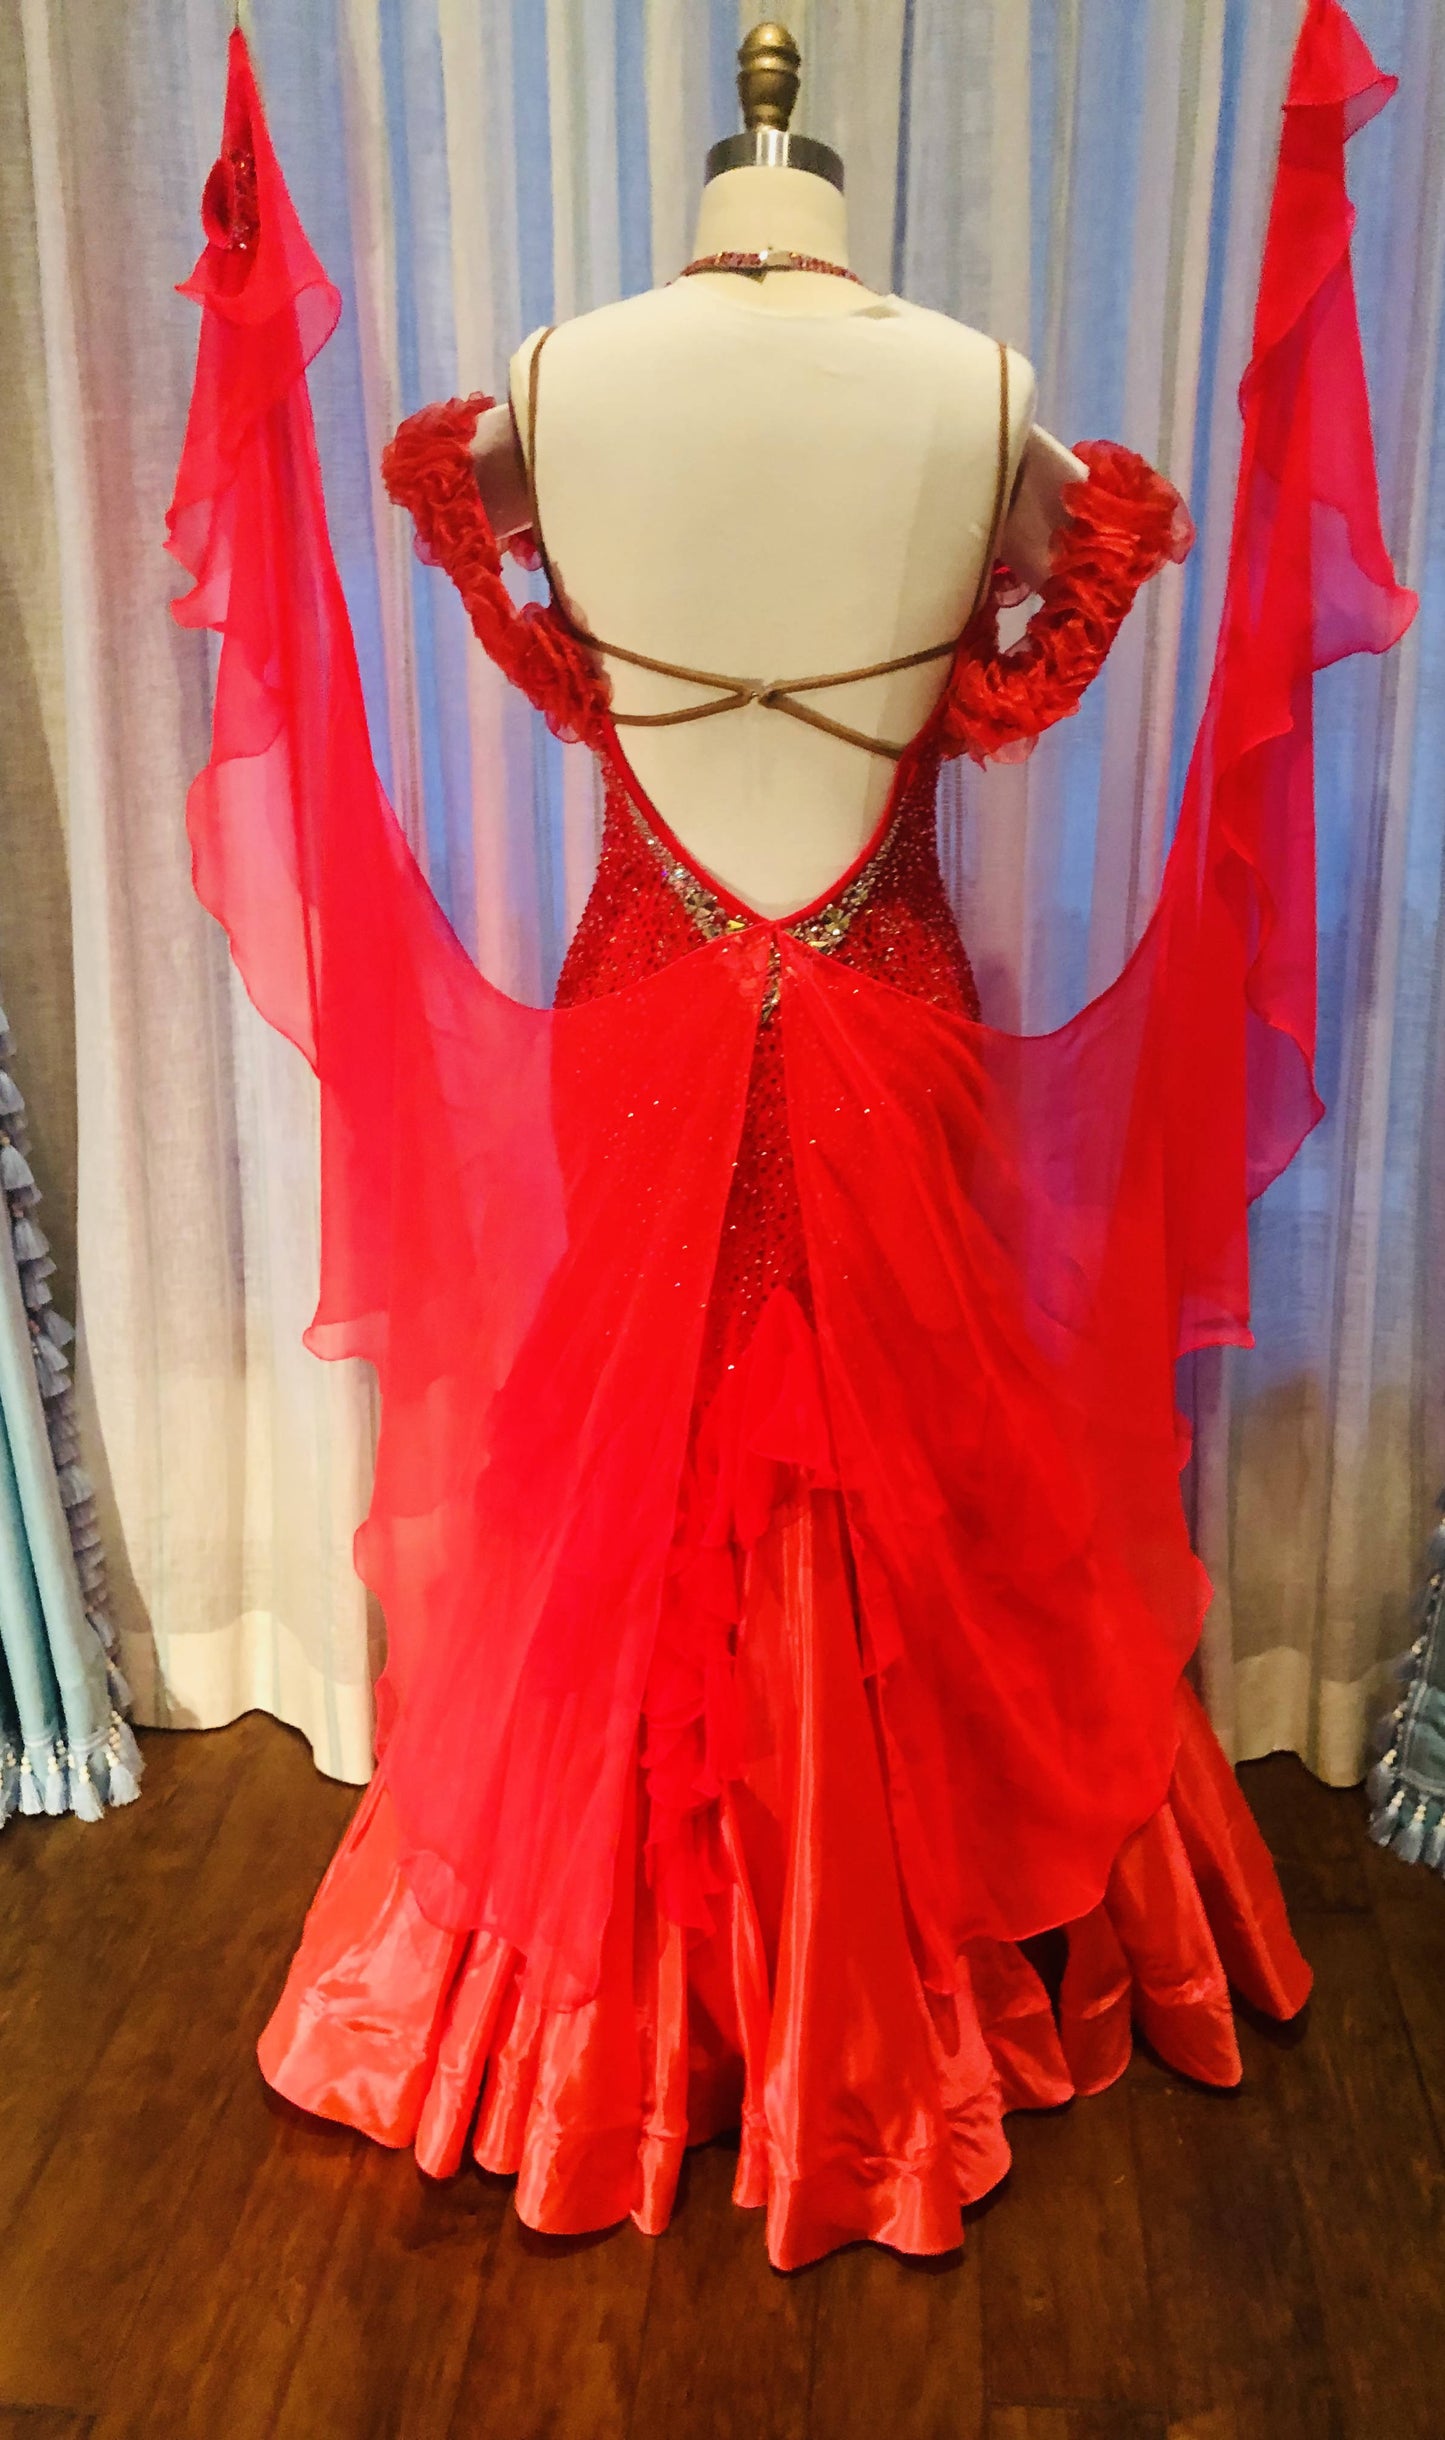 Sunglow Red Ballroom Dress